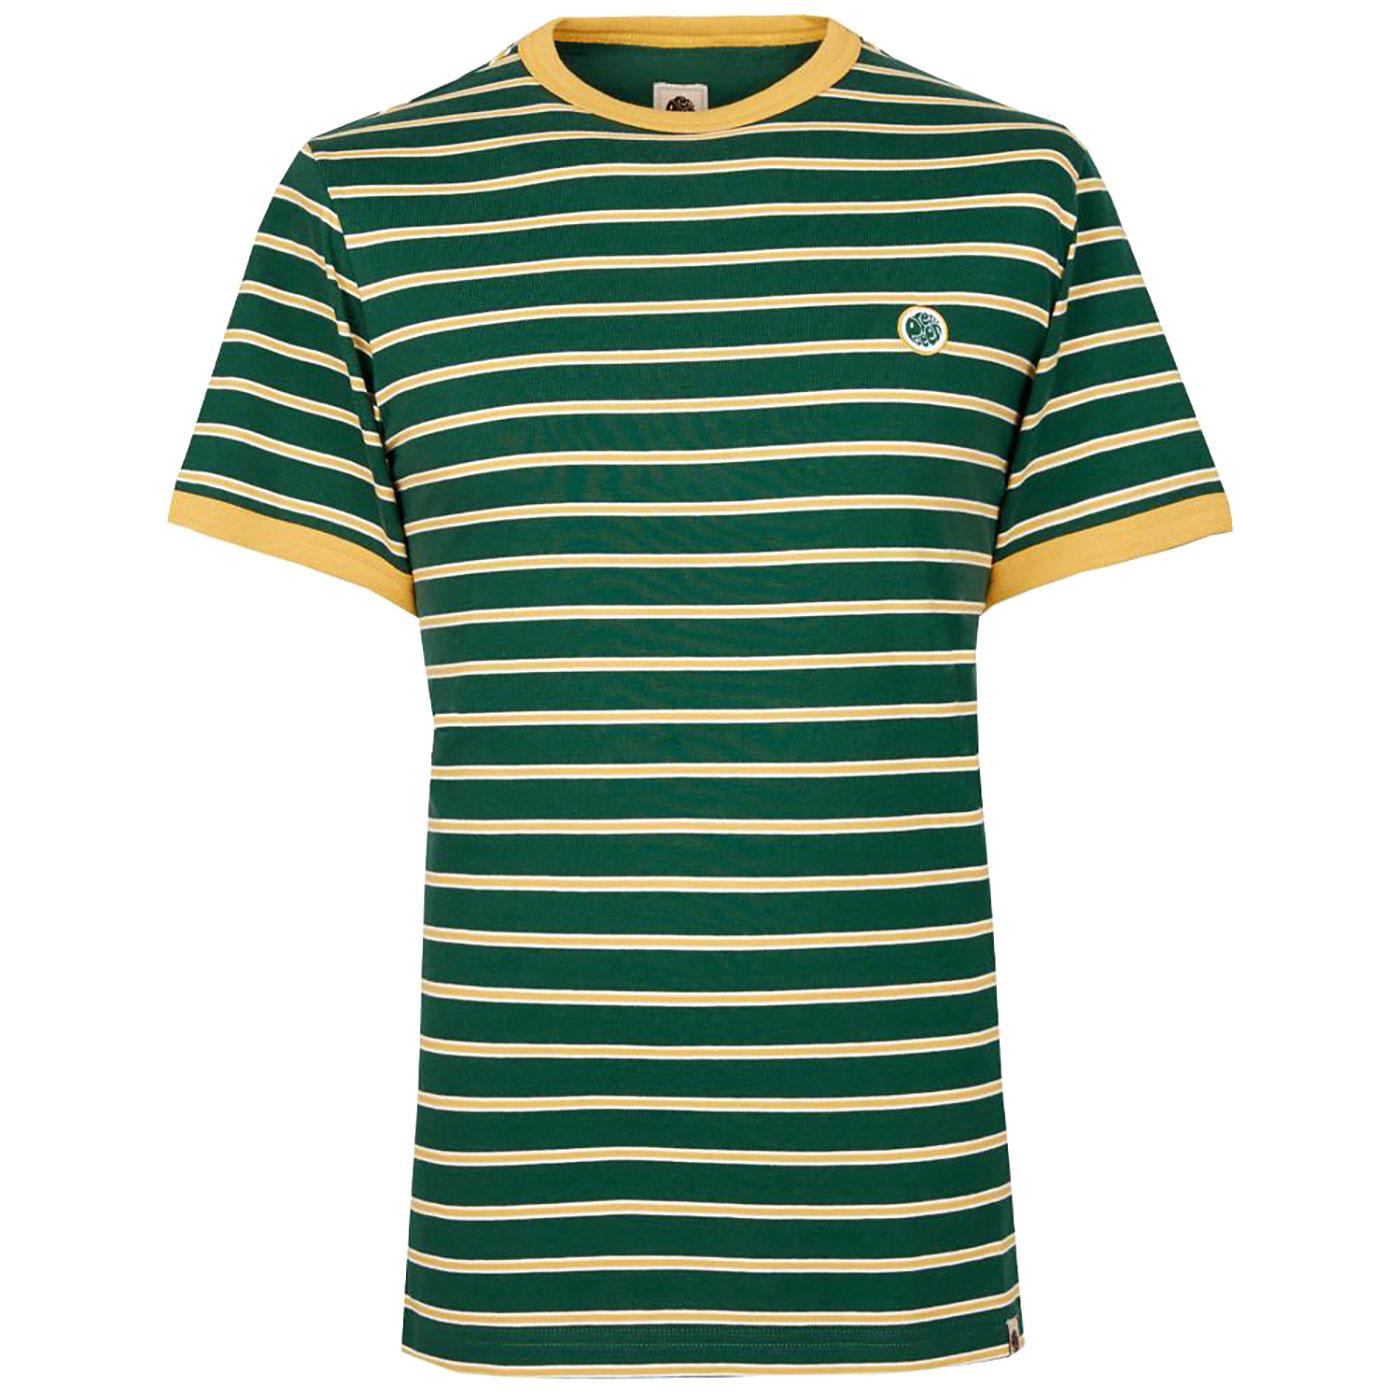 PRETTY GREEN Retro Contrast Stripe Ringer T-Shirt